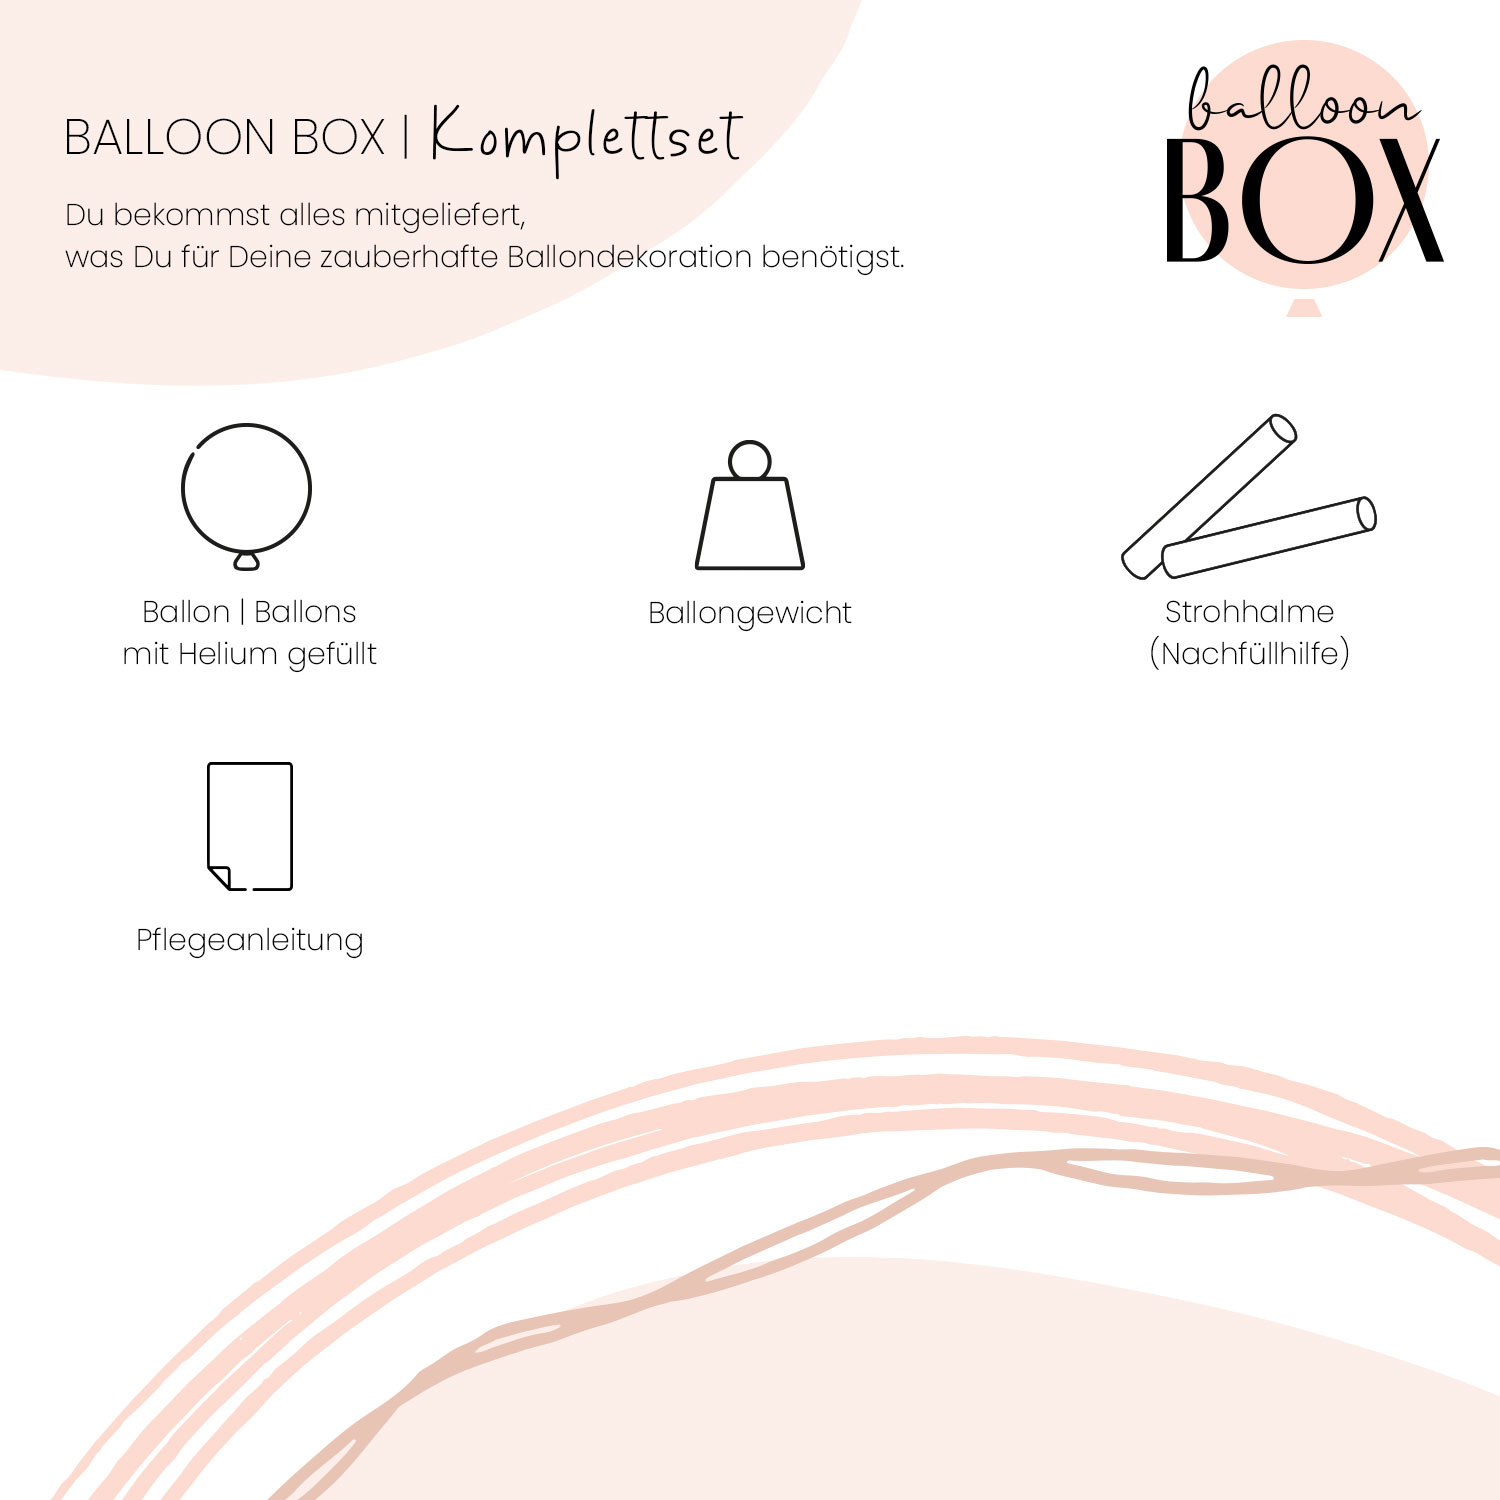 Heliumballon in a Box - Alles Liebe zur Geburt Pink